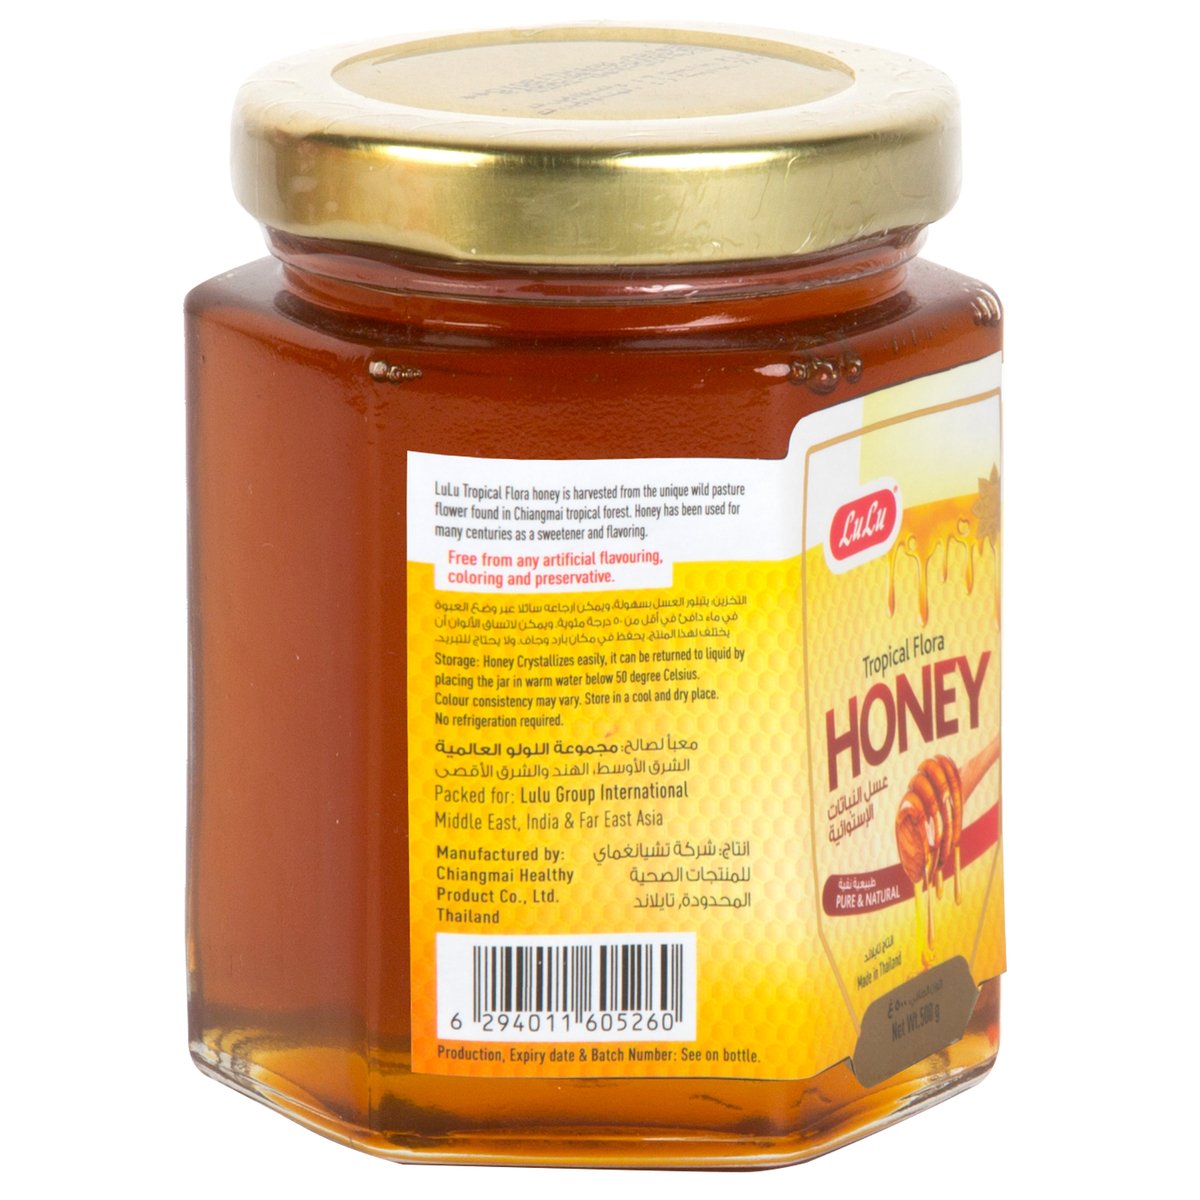 LuLu Tropical Flora Honey 500g